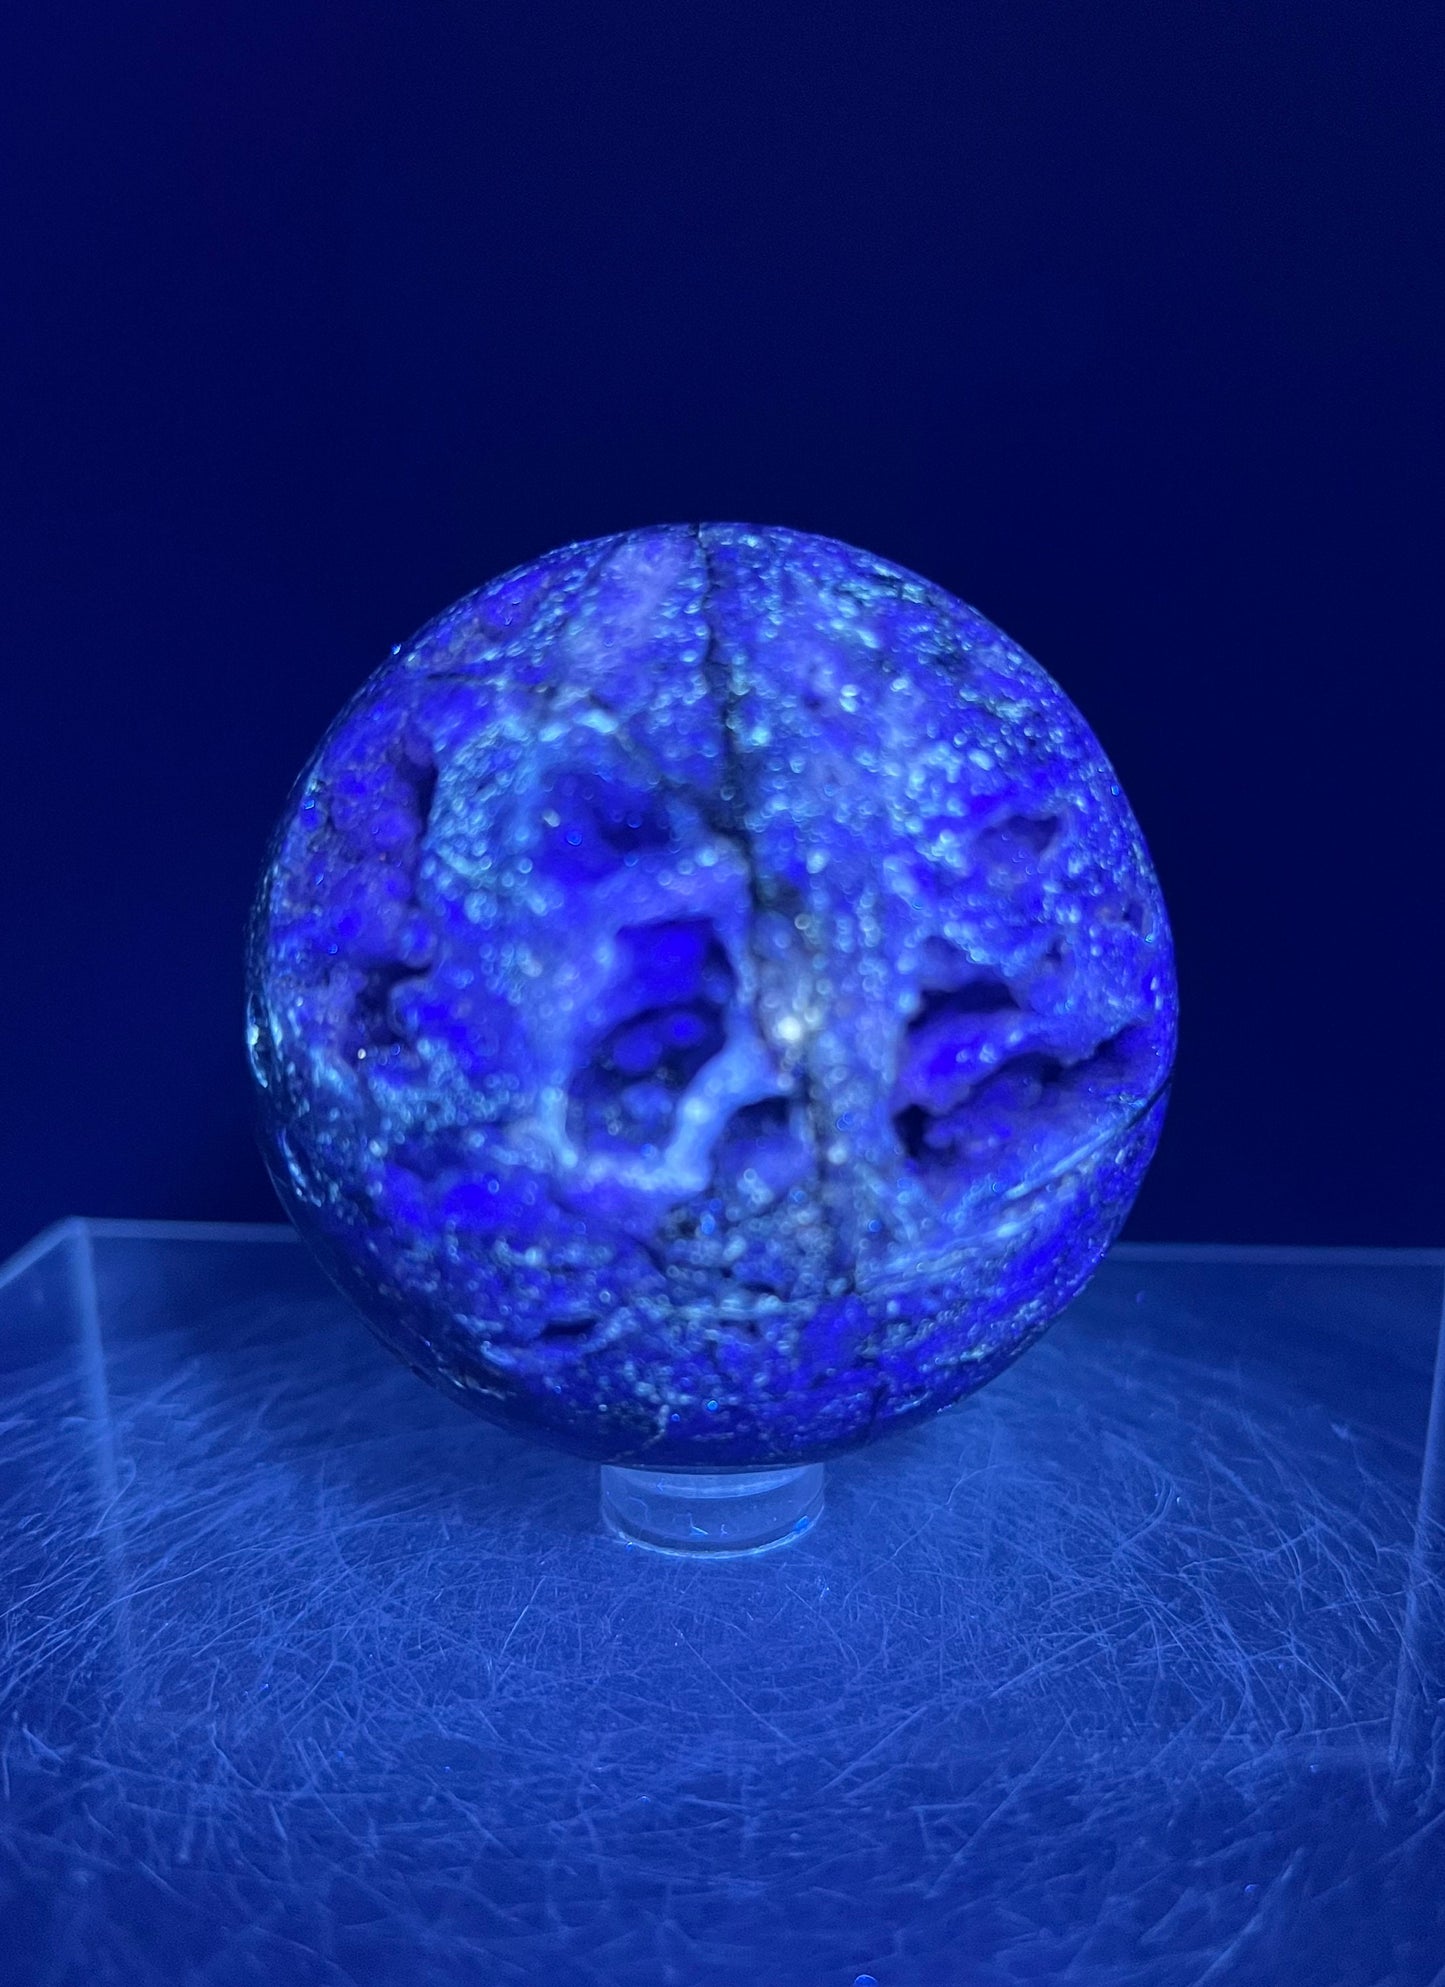 Crazy Druzy Sphalerite And Purple Fluorite Sphere. 62mm. Amazing Sugar Druzy. Lots Of Flash On This Incredible Display Sphere.